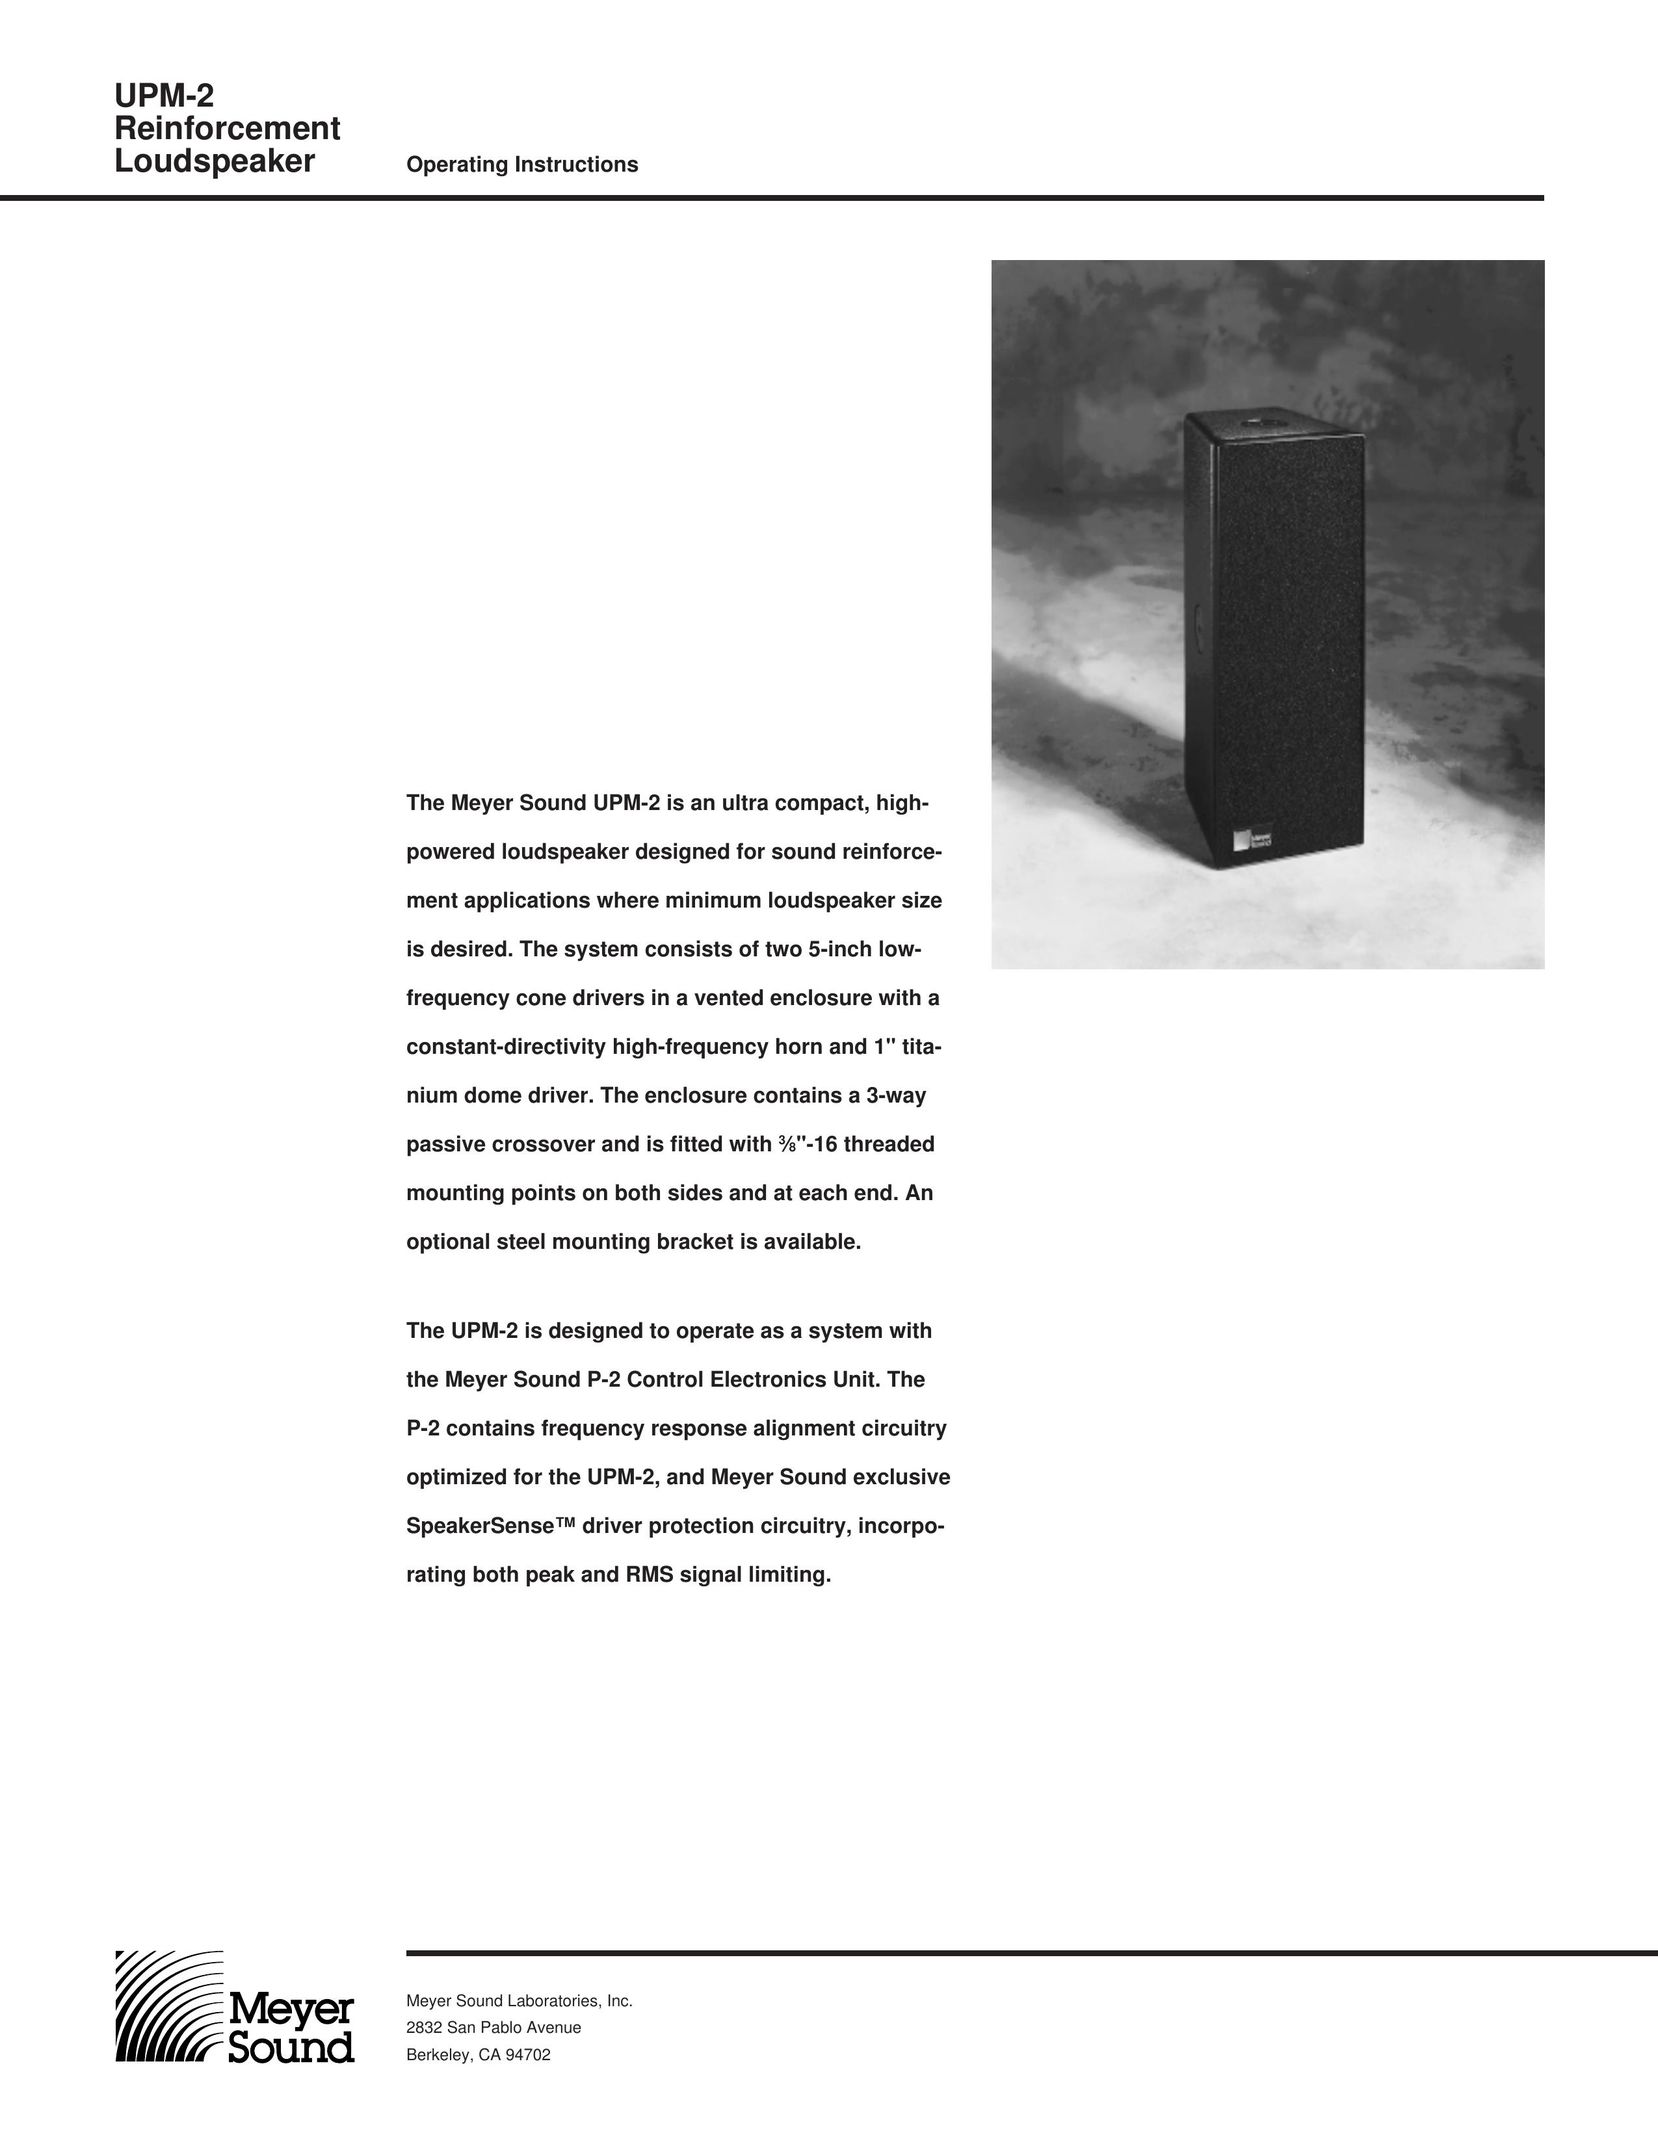 Meyer Sound UPM-2 Portable Speaker User Manual